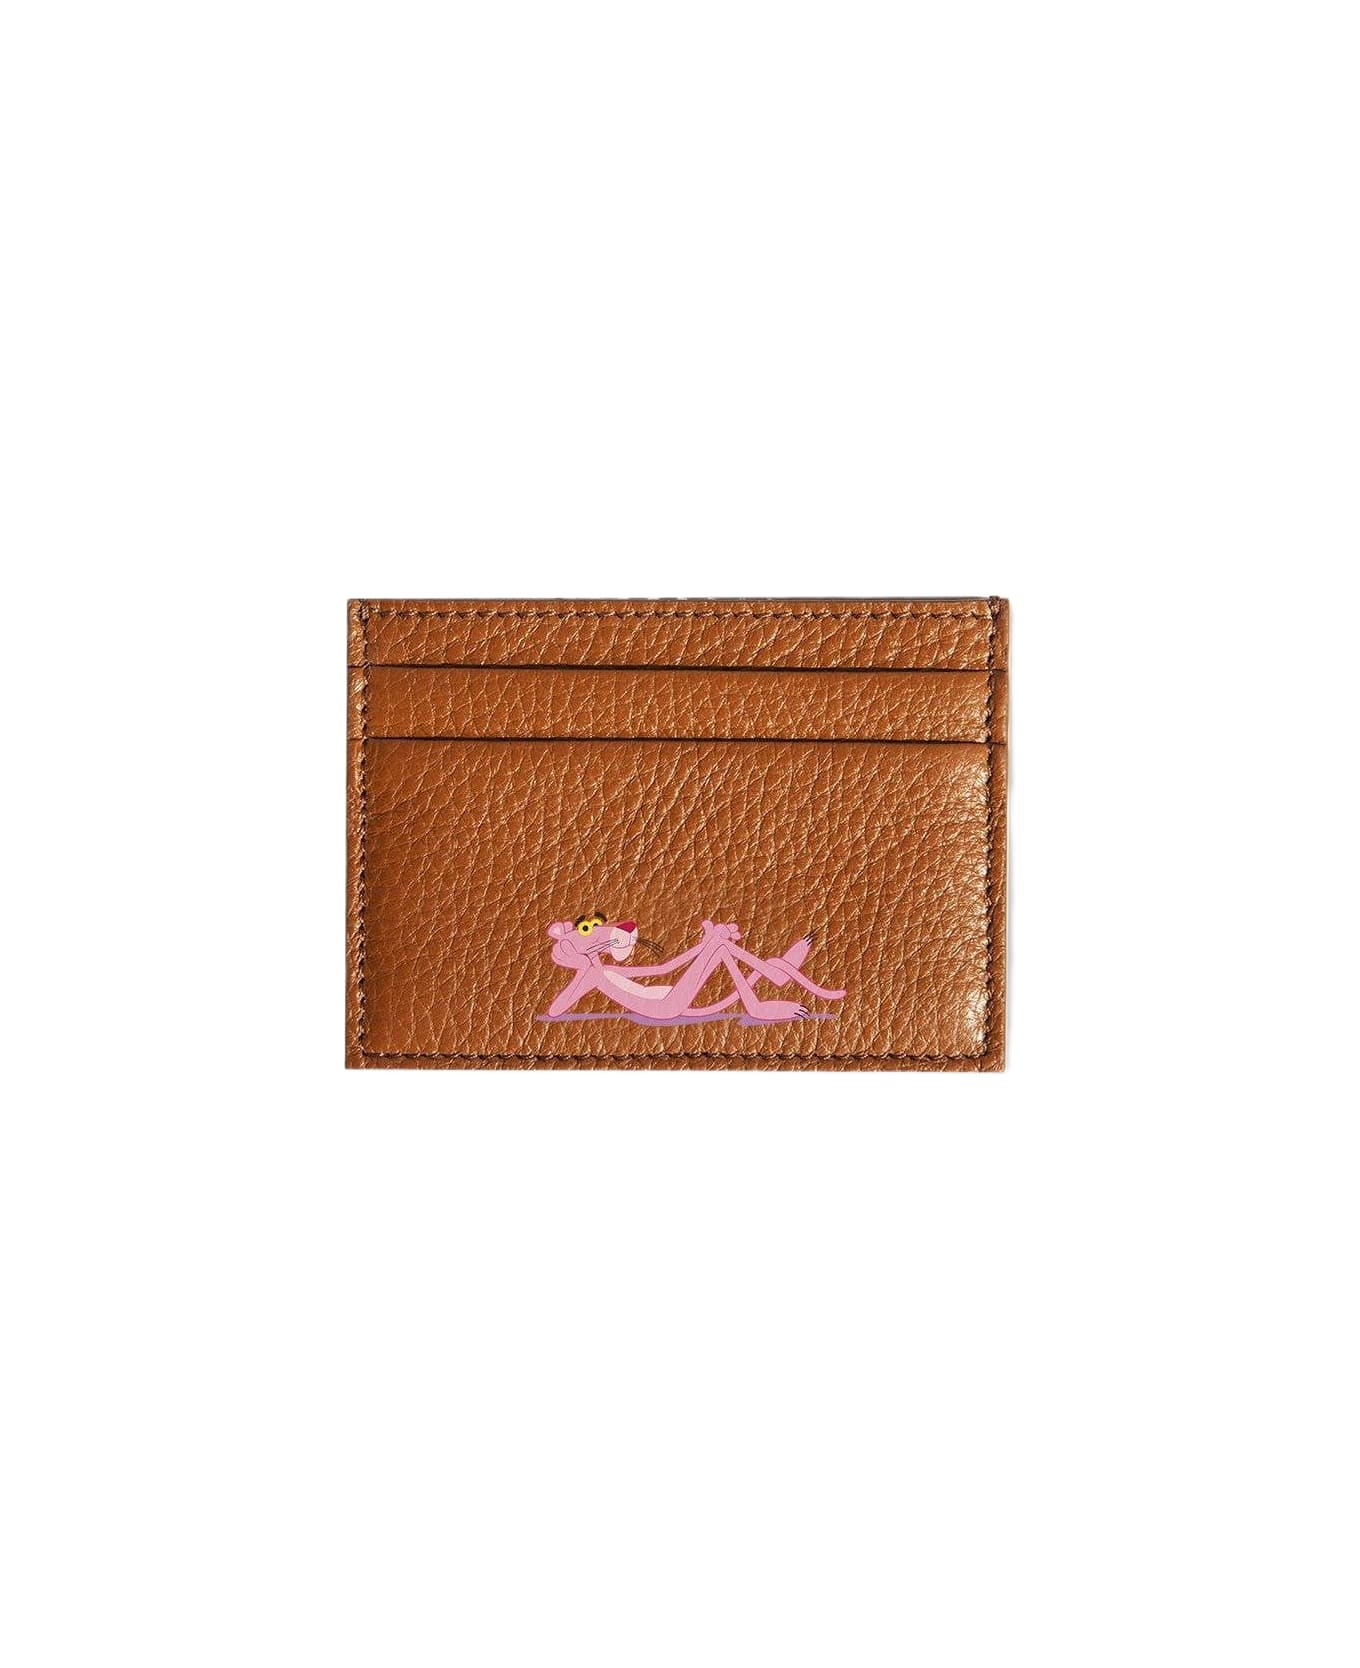 Larusmiani Card Holder 'pink Panther' Wallet - Sienna